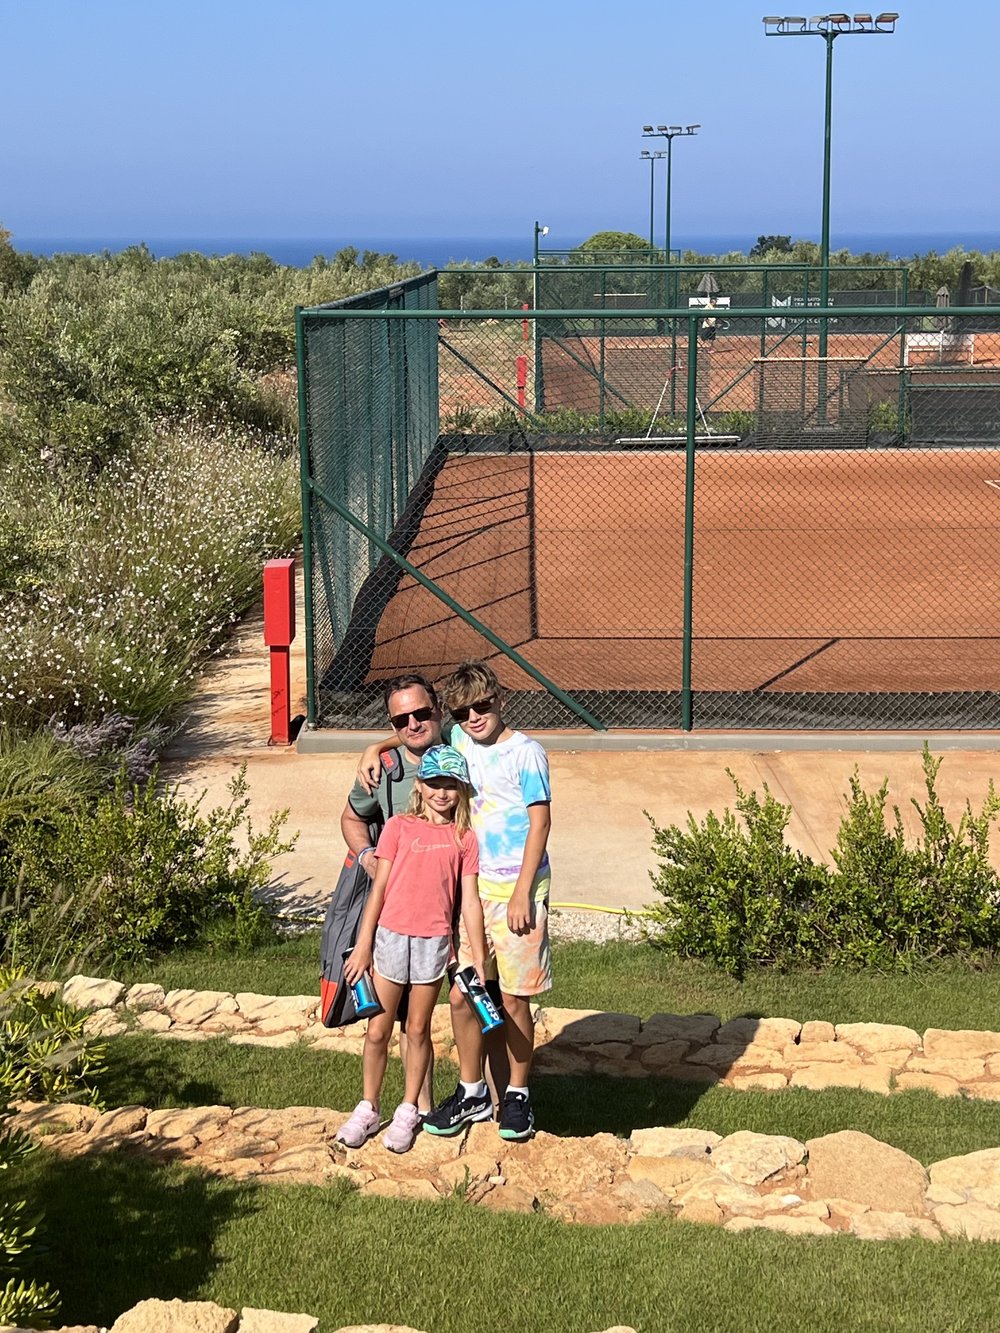 bret and kids at tennis.jpg